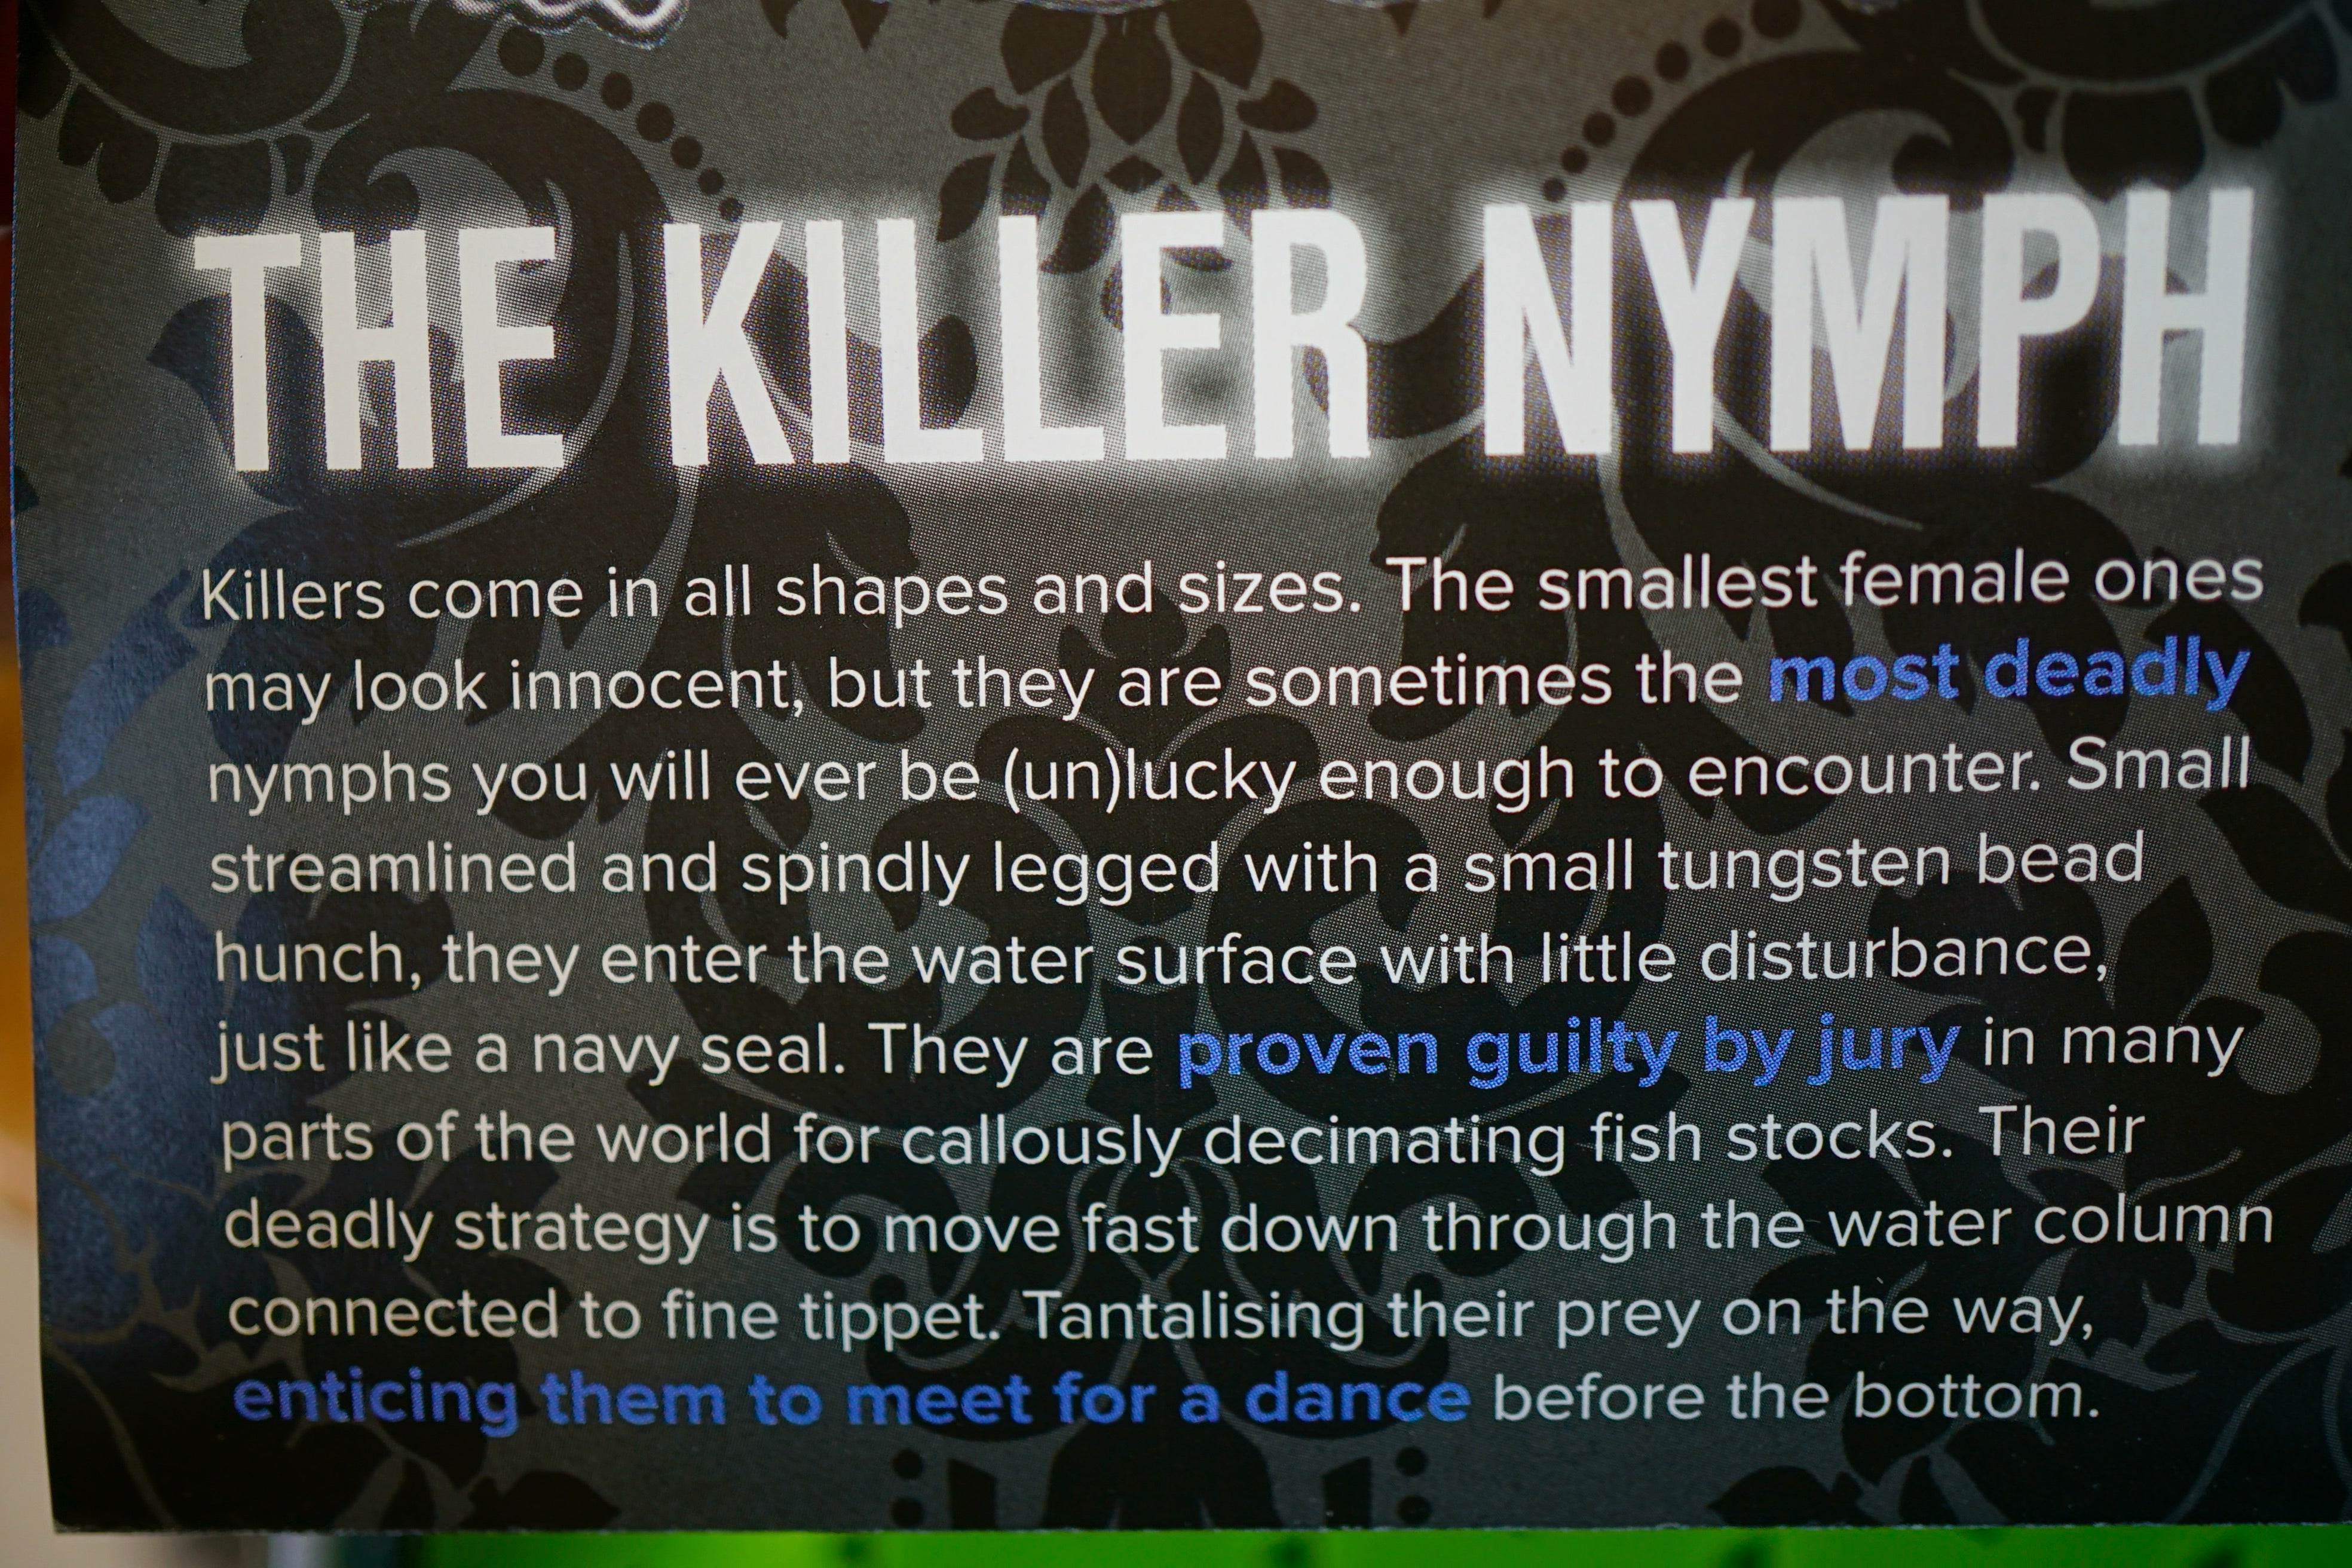 Loaded 15-Killer Nymph-Mayfly-Slim Fly Box.